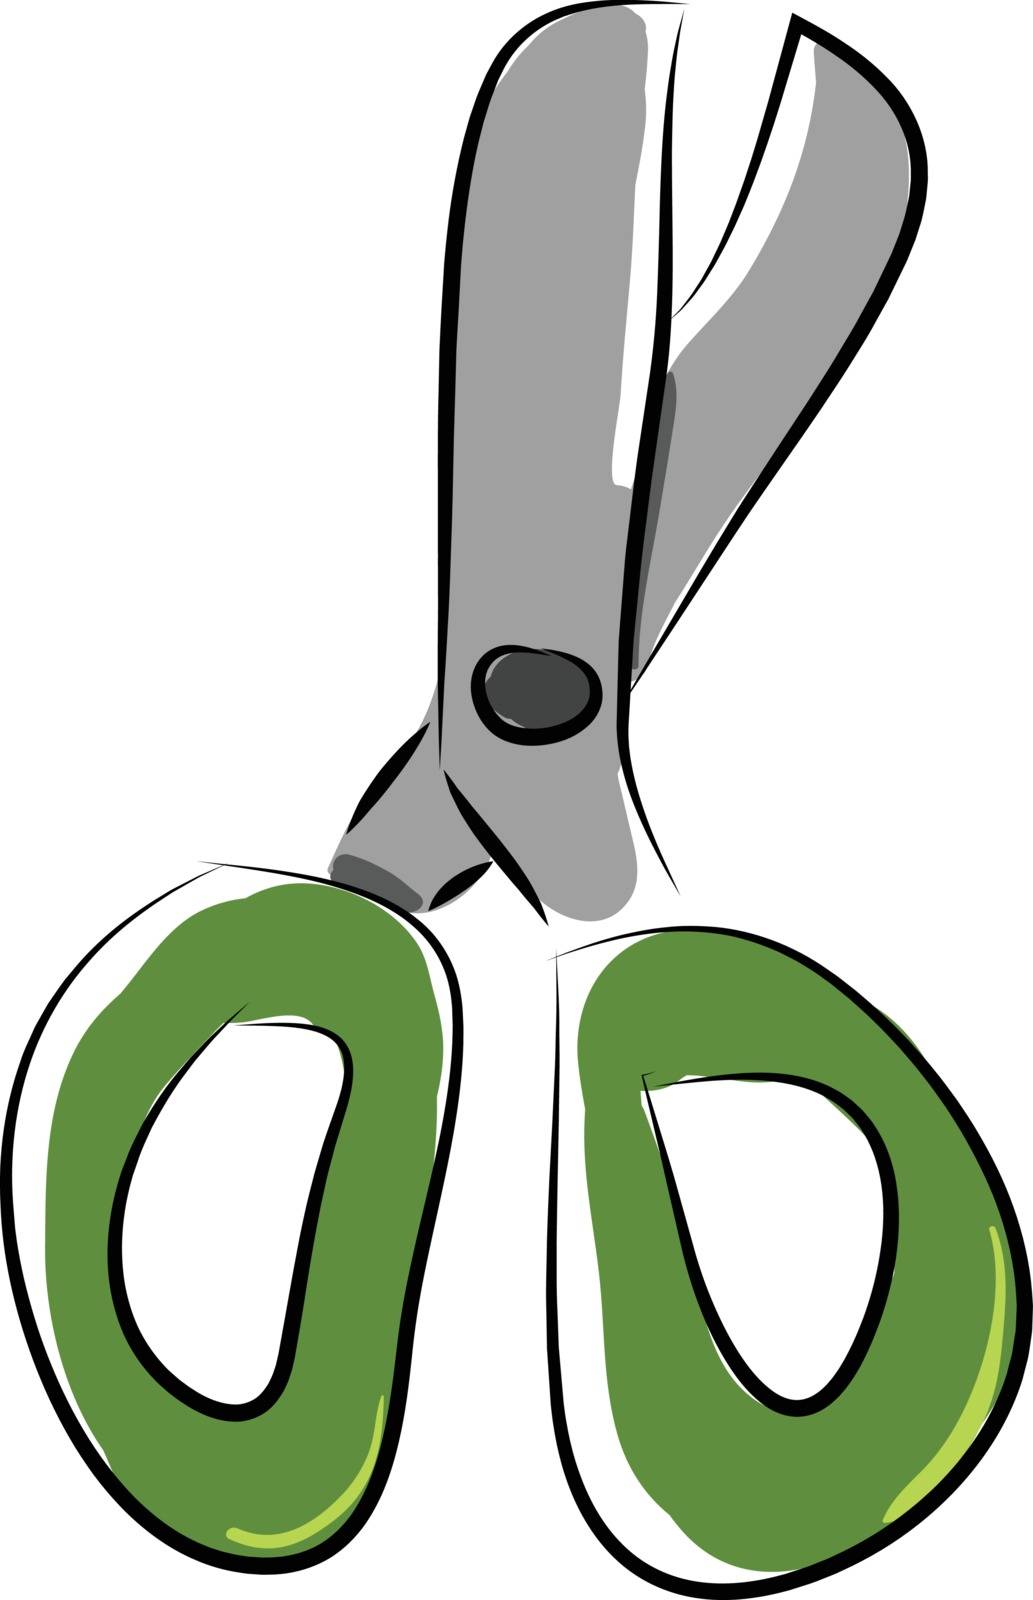 Simple cartoon green scissors vector illustration on white background